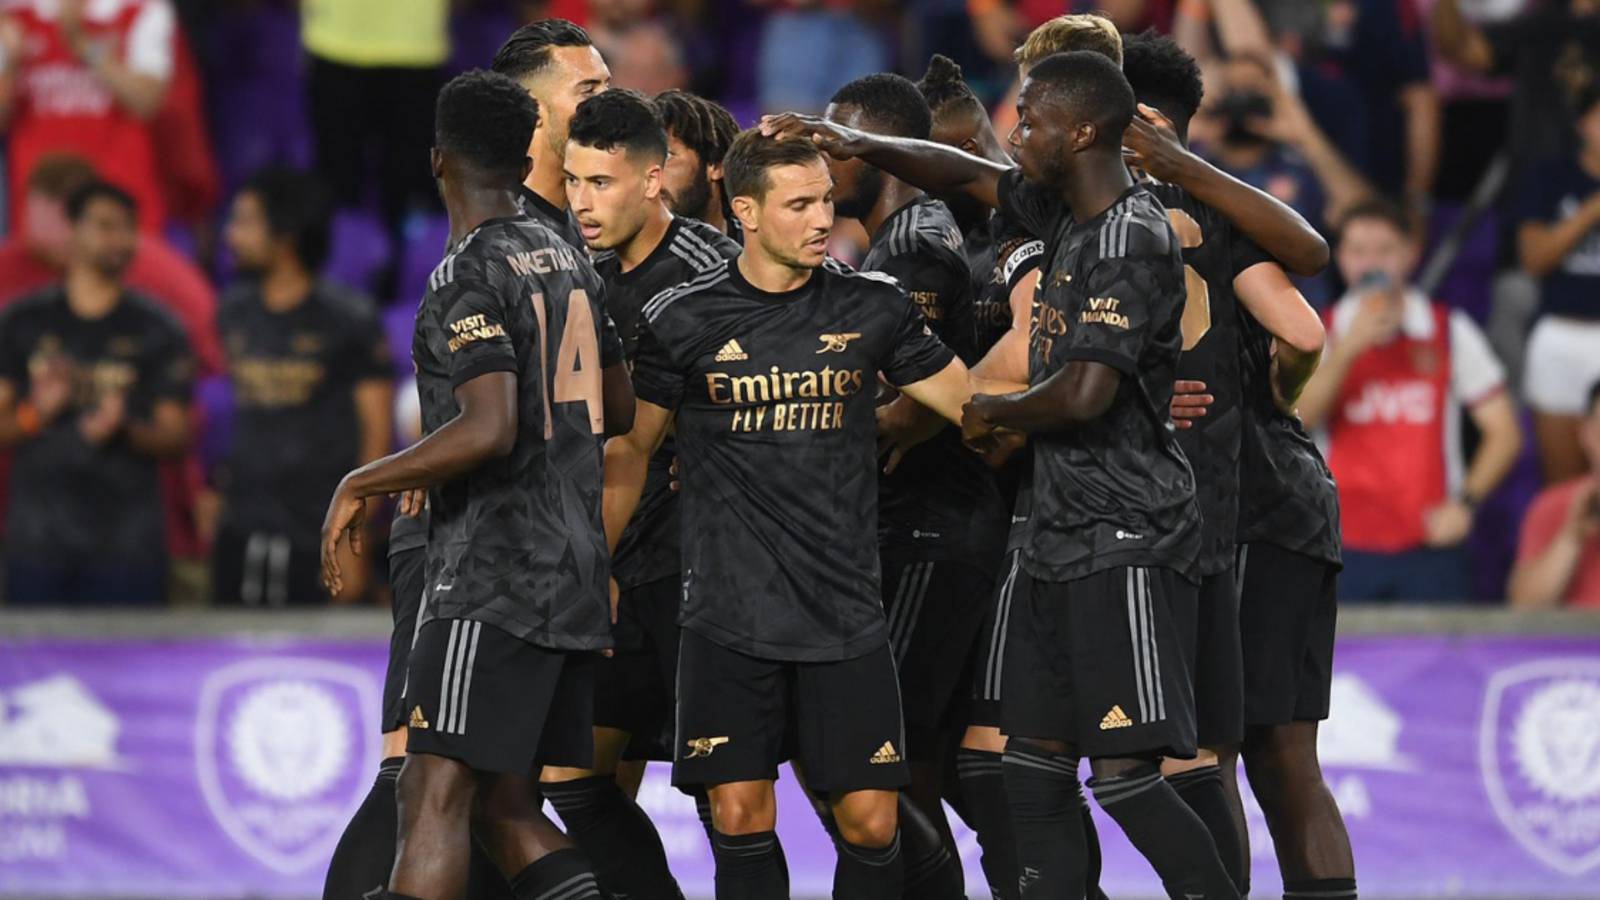 Orlando City 1 - 3 Arsenal - Match Report